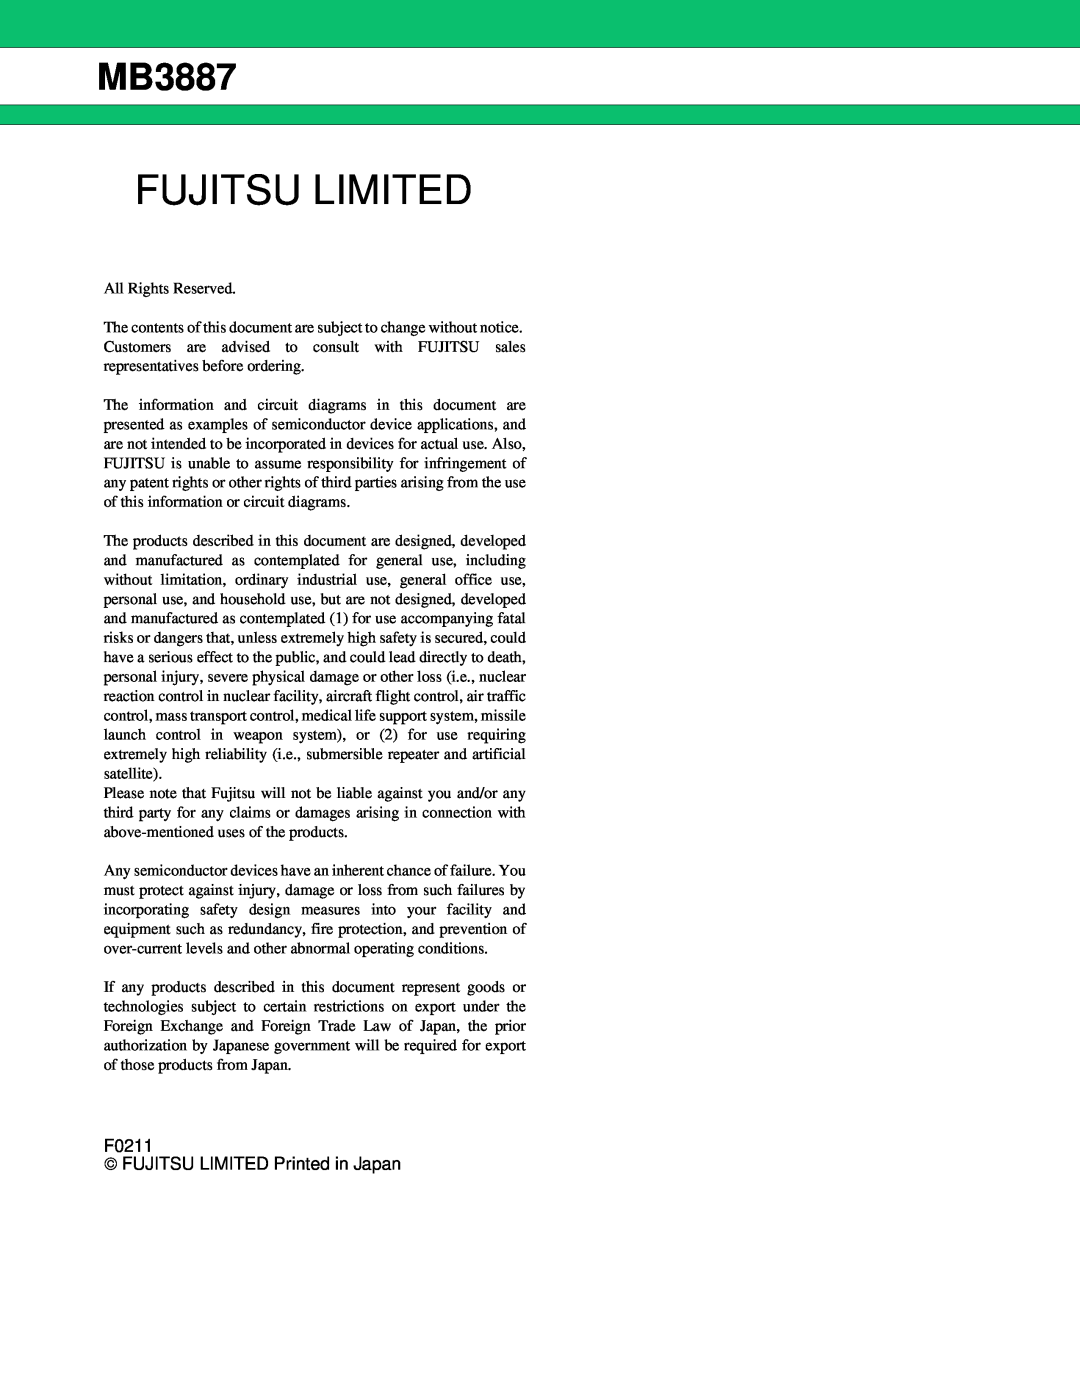 Fujitsu MB3887 manual Fujitsu Limited, F0211  FUJITSU LIMITED Printed in Japan 